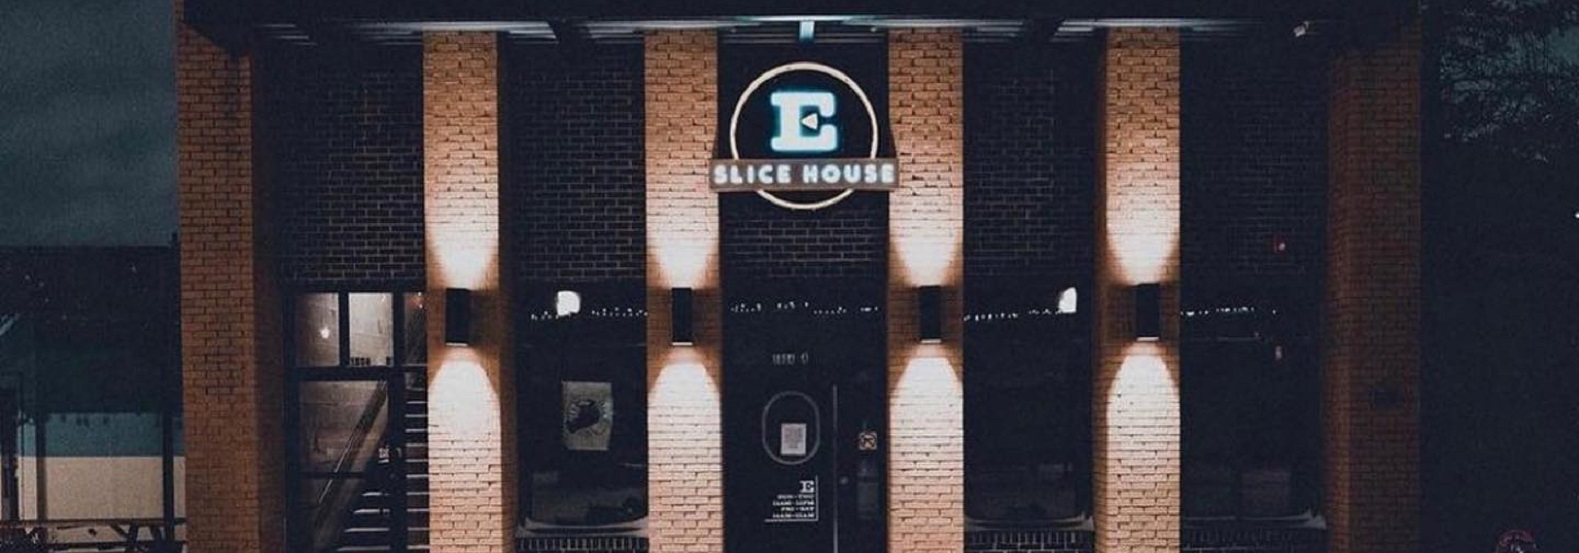 Come to Empire Slice House located in OKC, Tulsa, Edmond, & Nichols Hills where we are open late serving pizza.